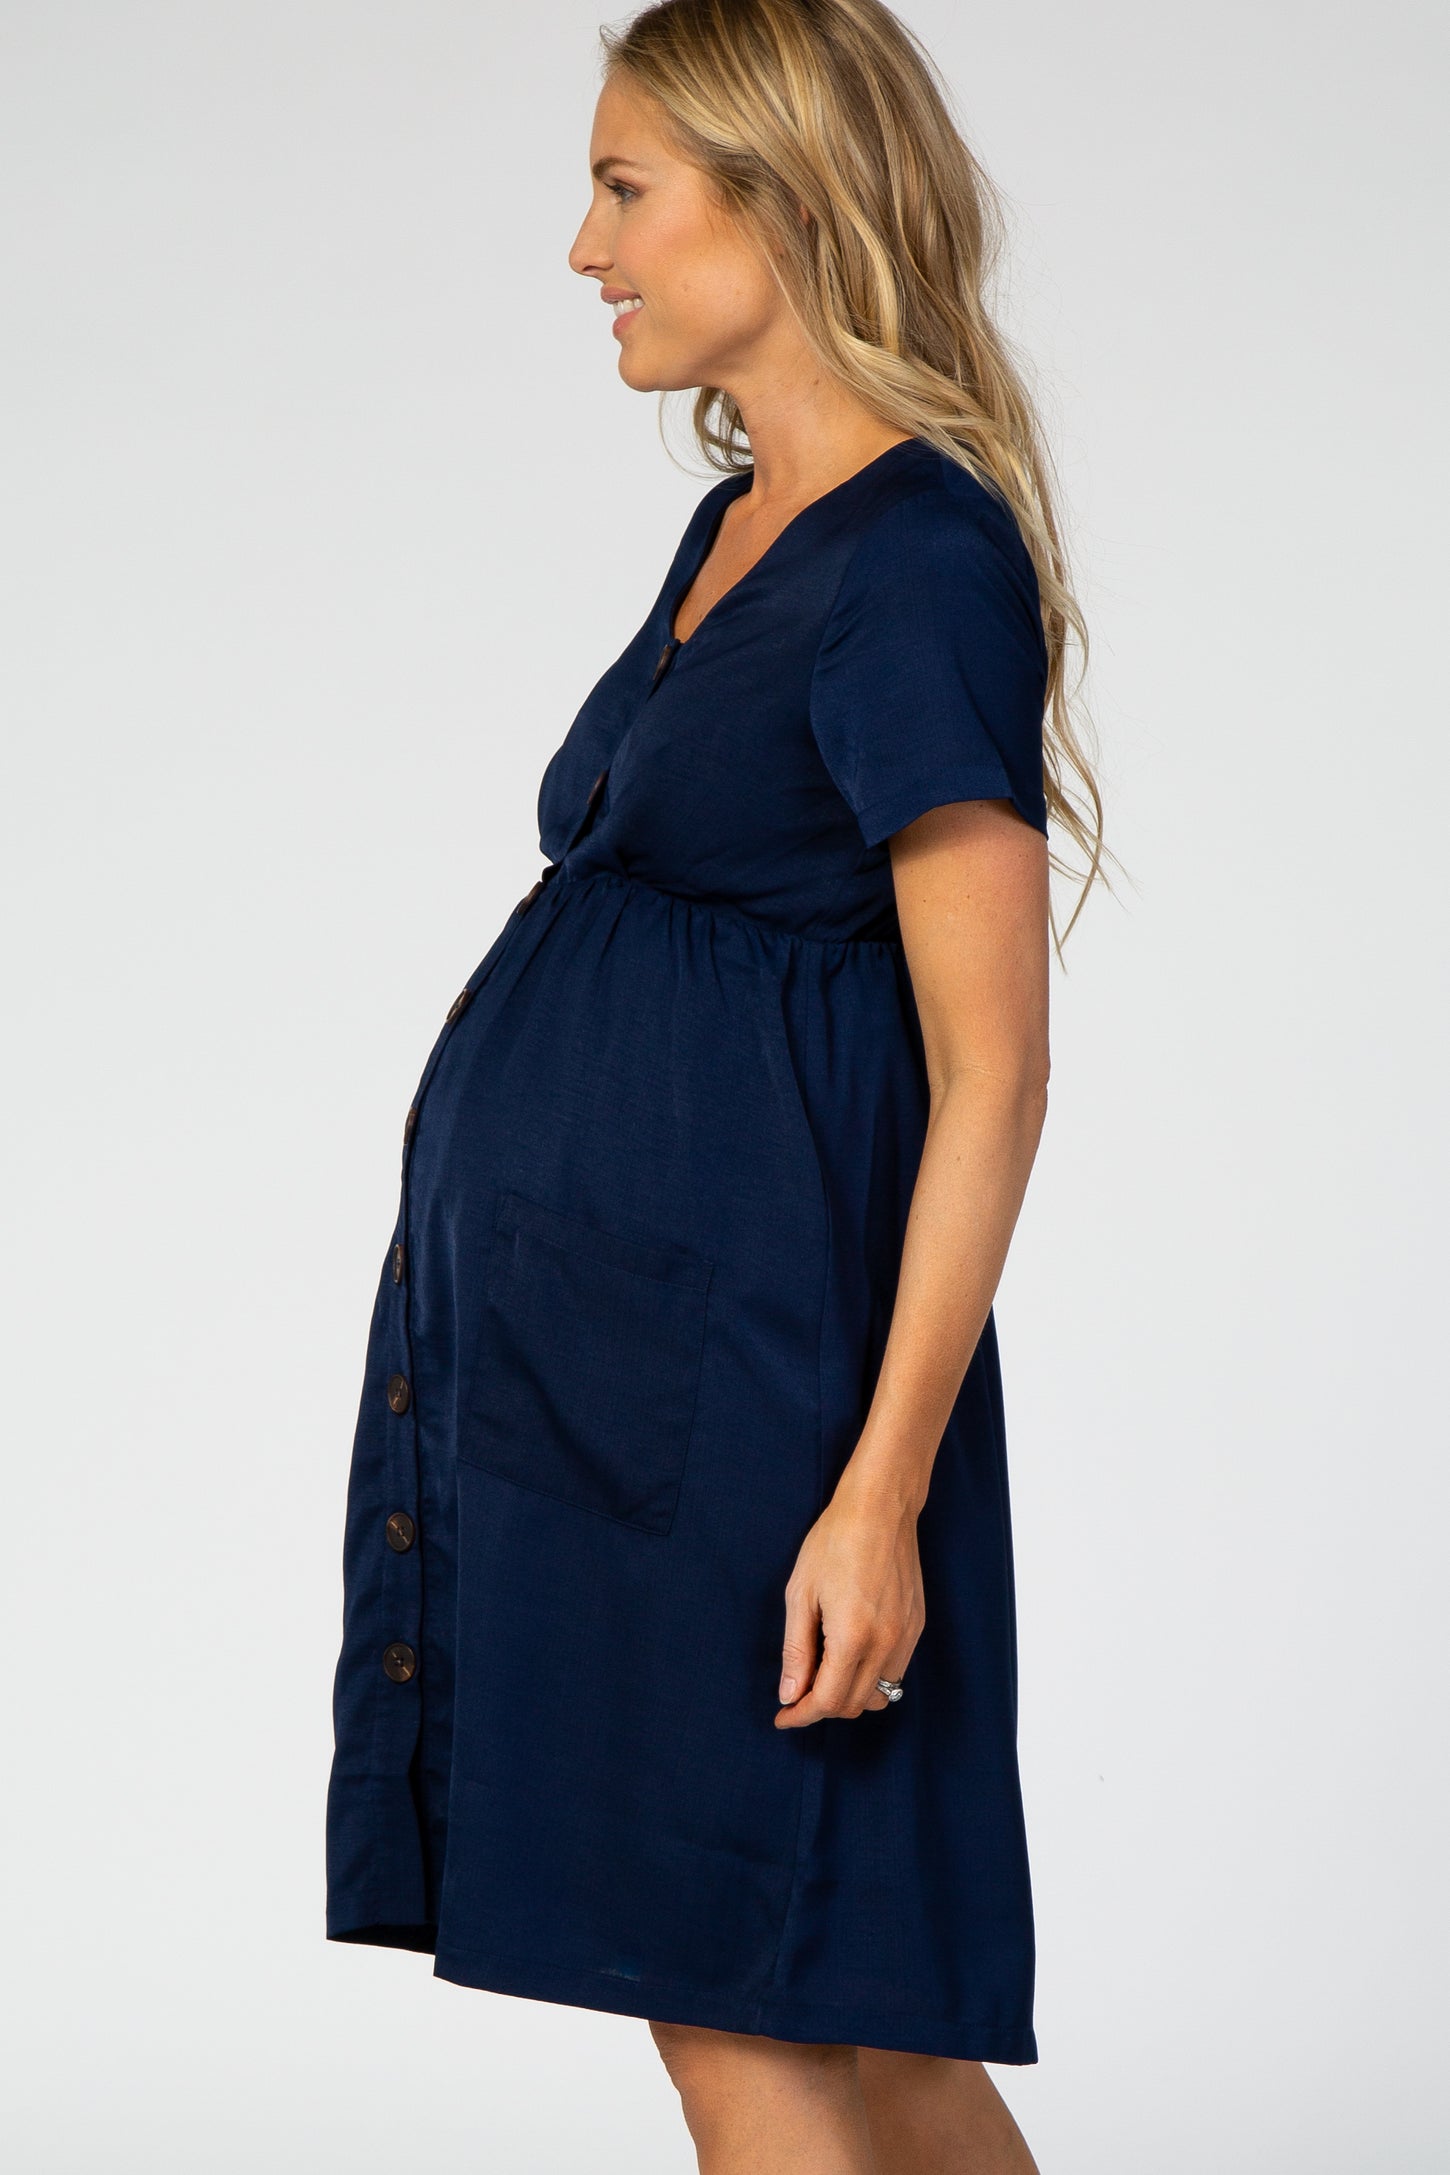 PinkBlush Navy Button Down Short Sleeve Maternity Dress